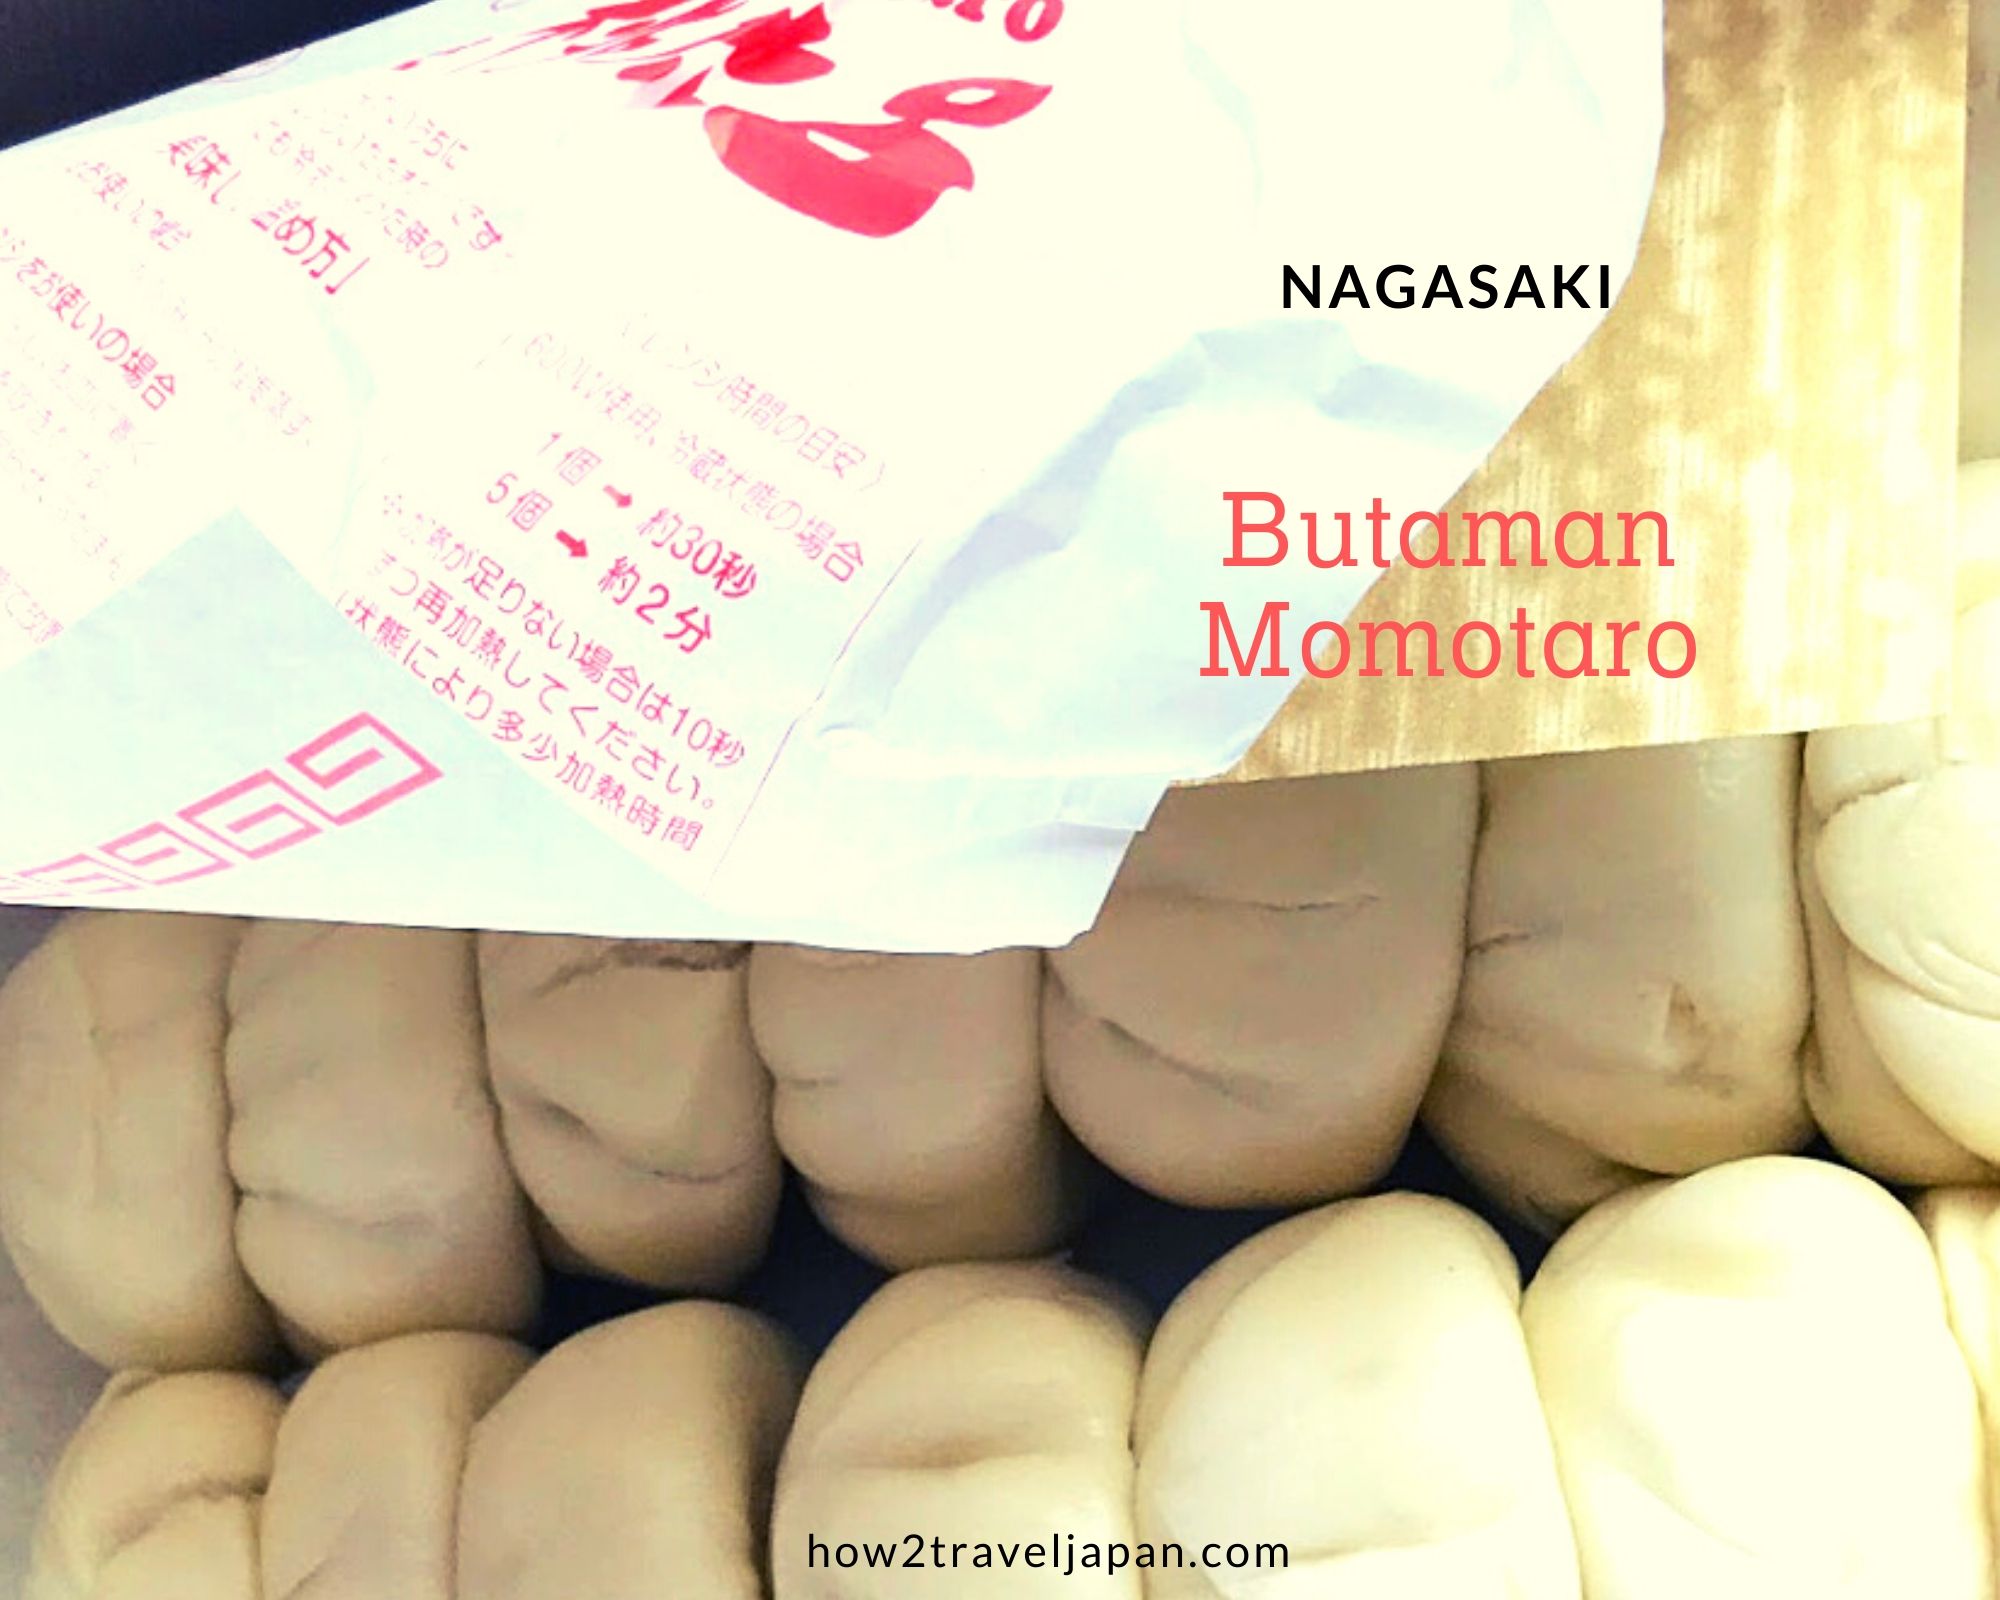 You are currently viewing Butaman Momotaro from Nagasaki